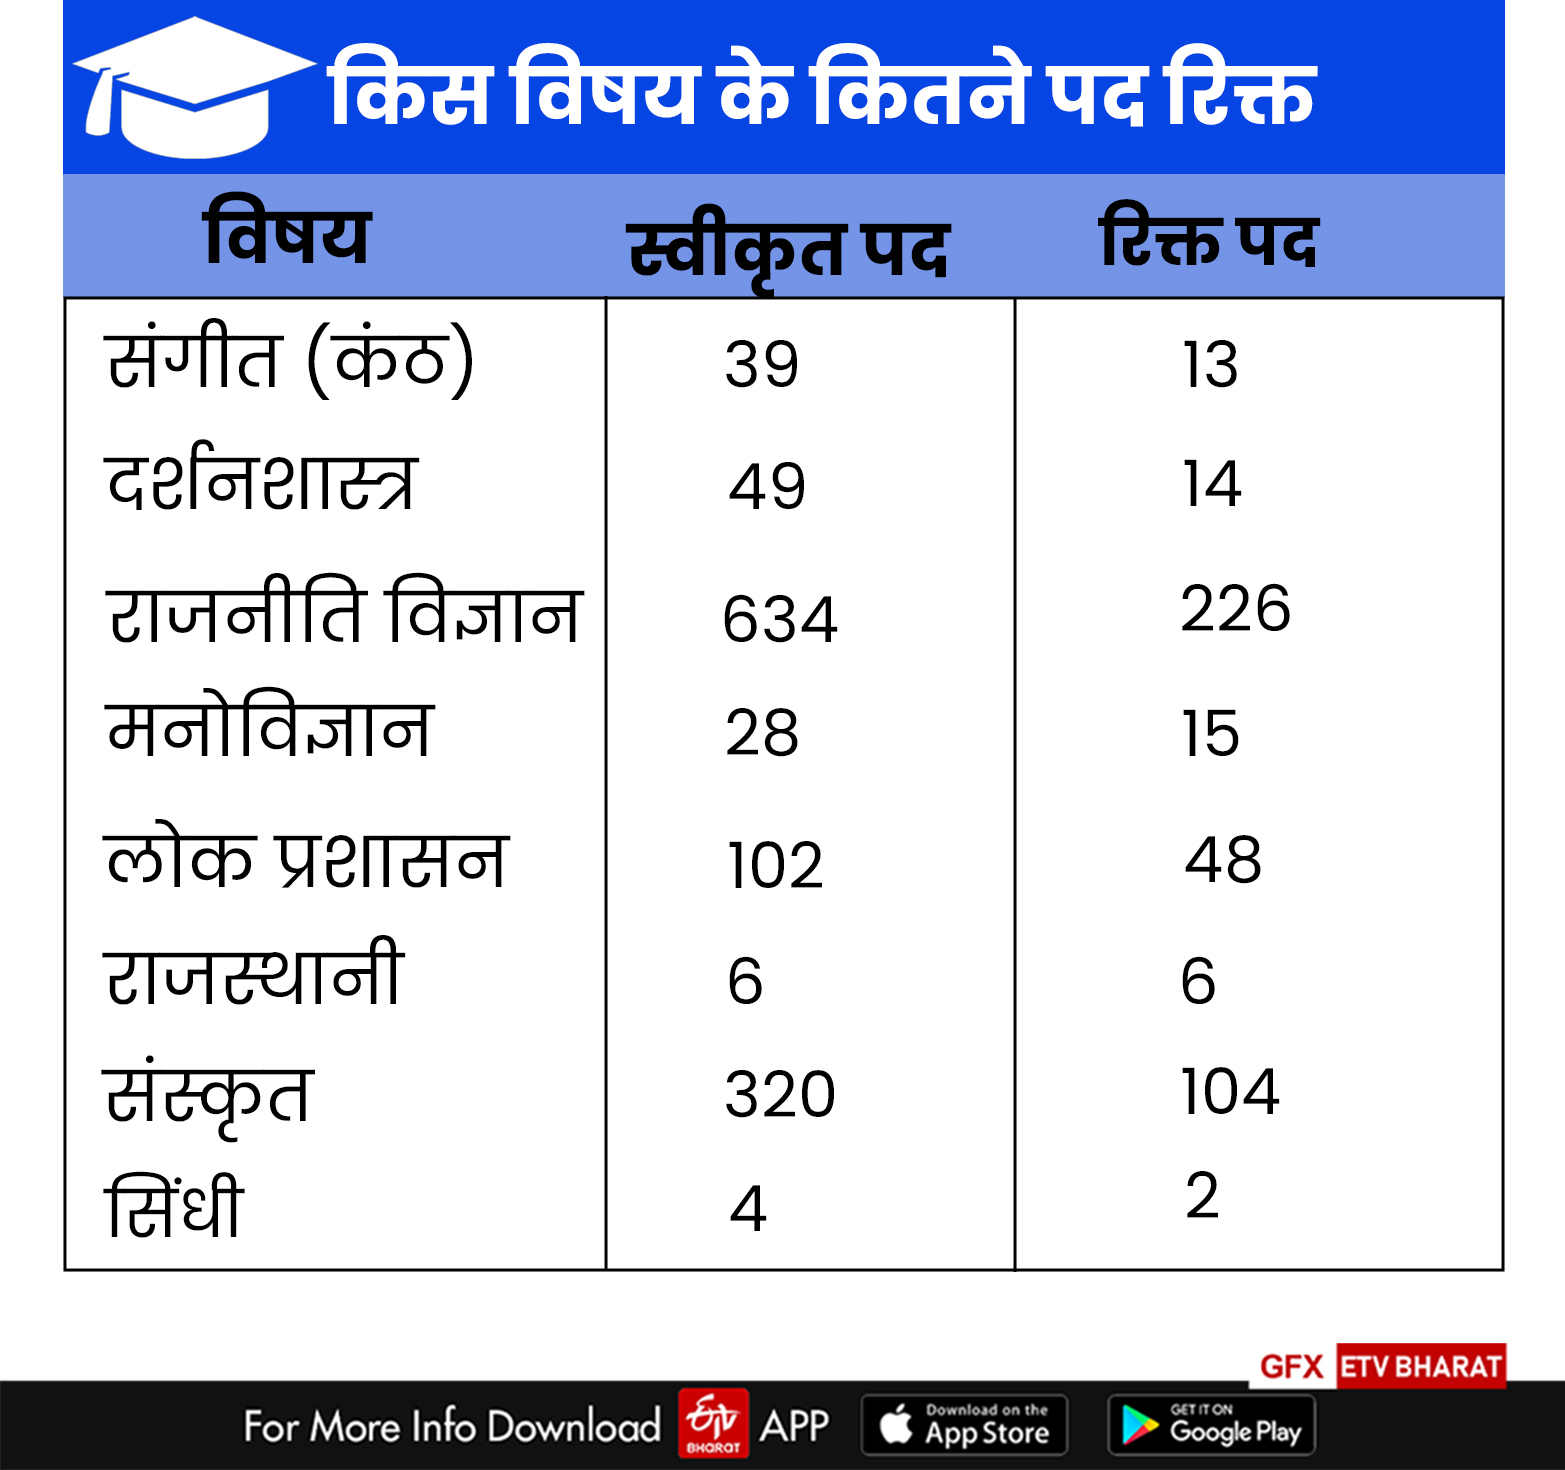 Rajasthan Higher education